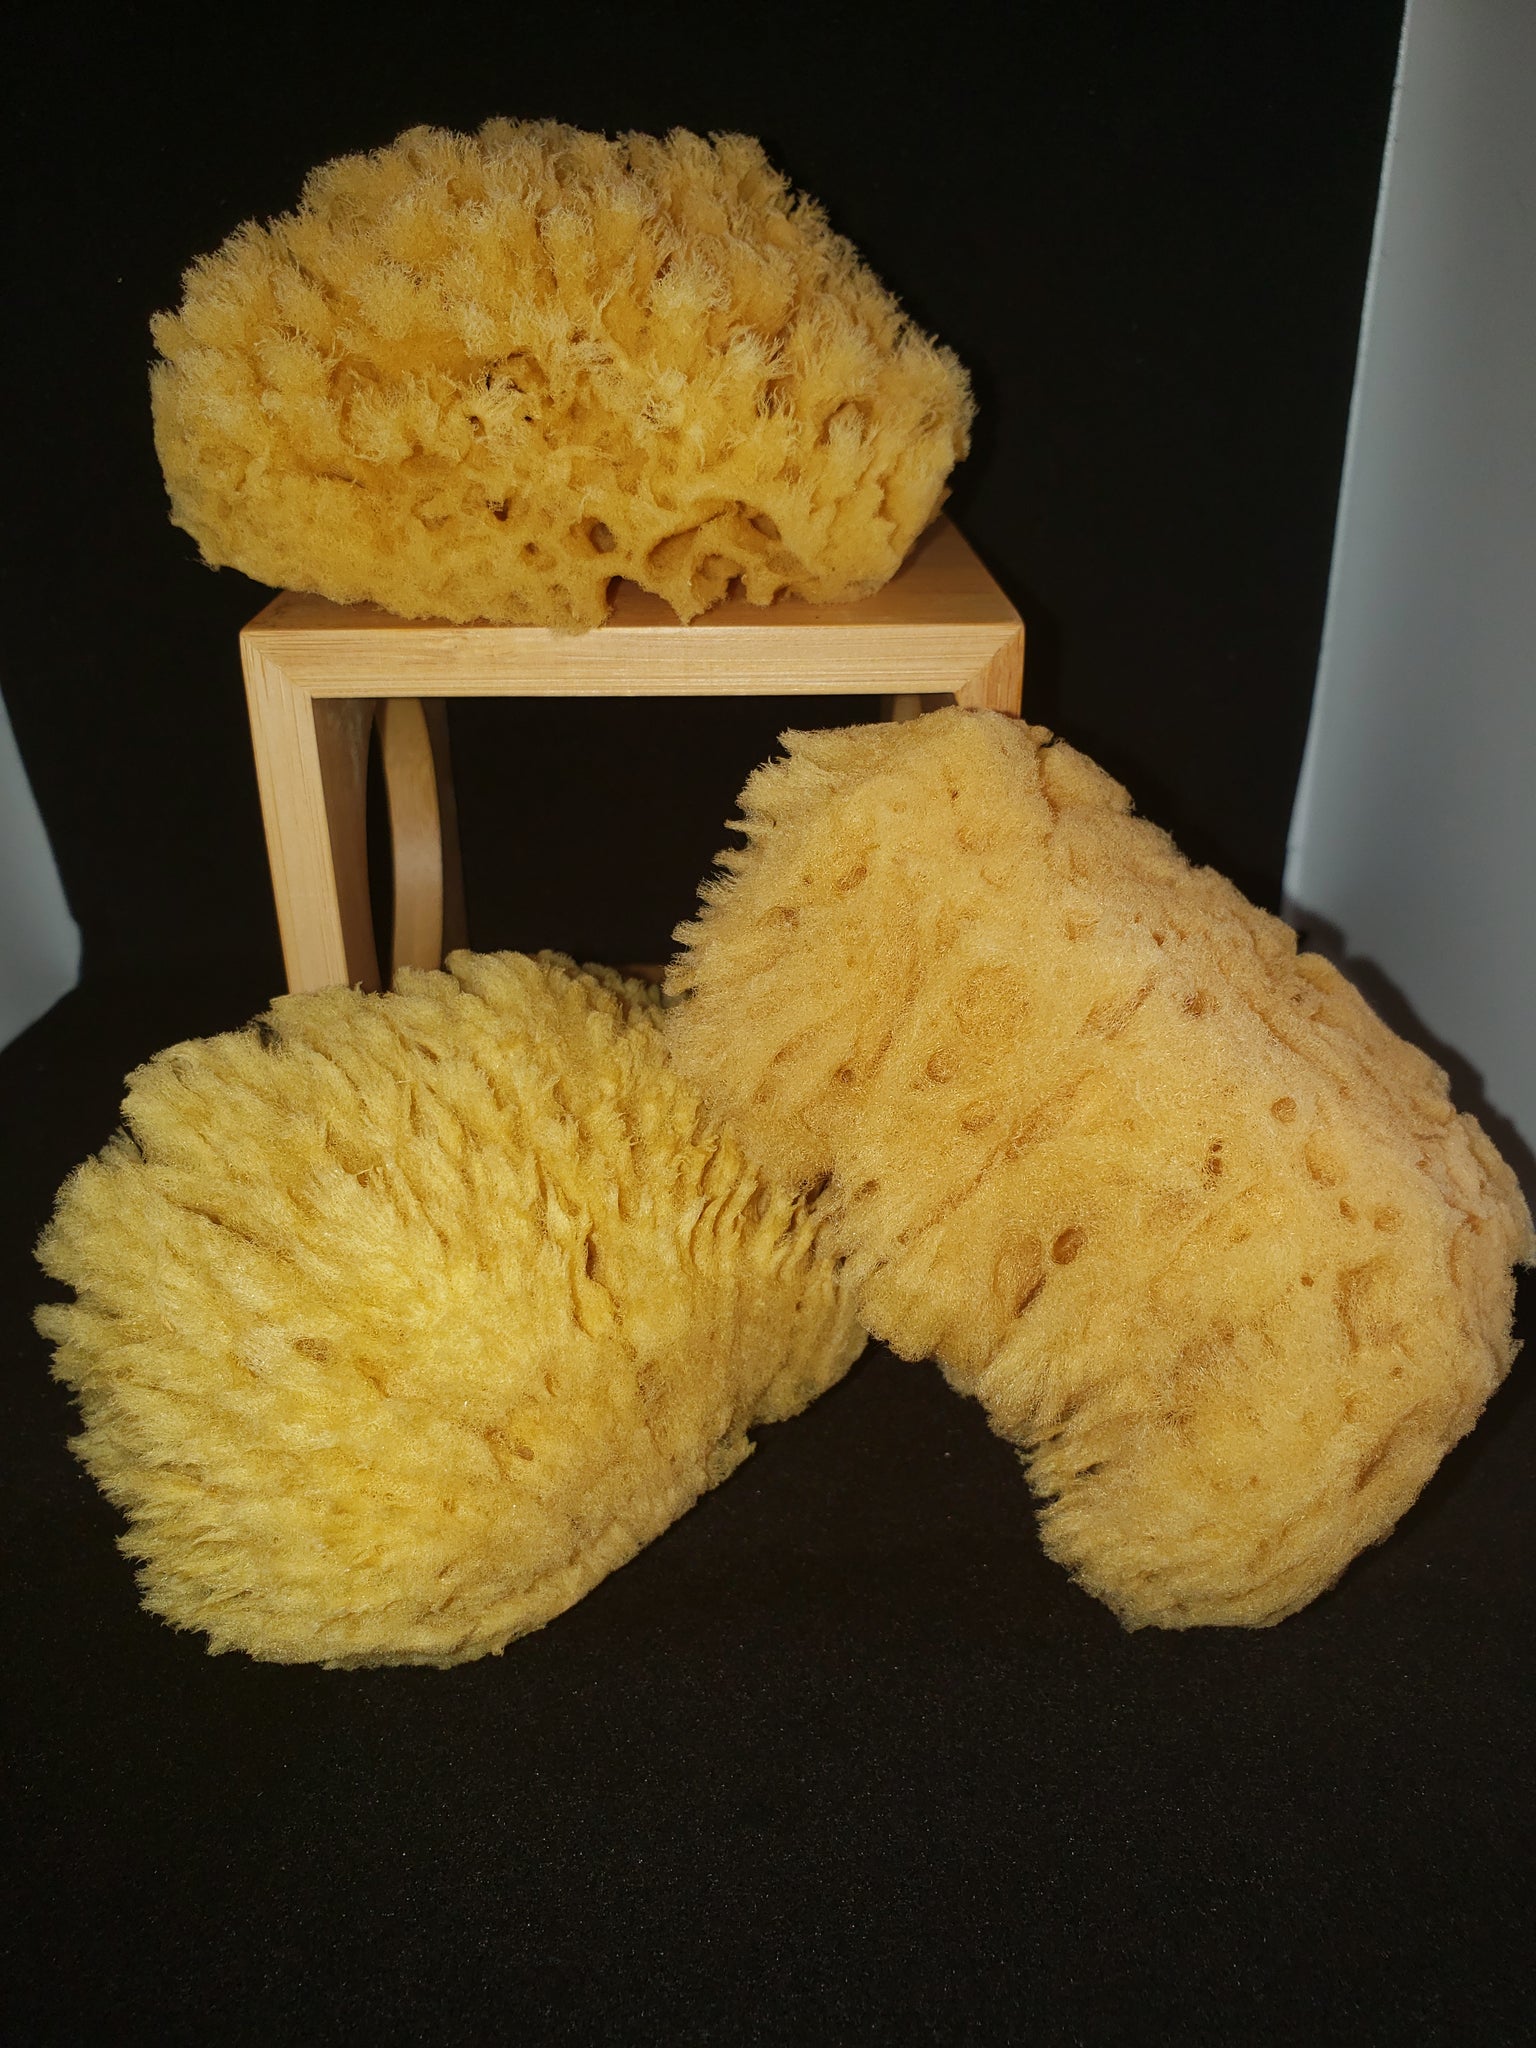 Two Black Sponges Household Needs Image Stock Photo 2088999217